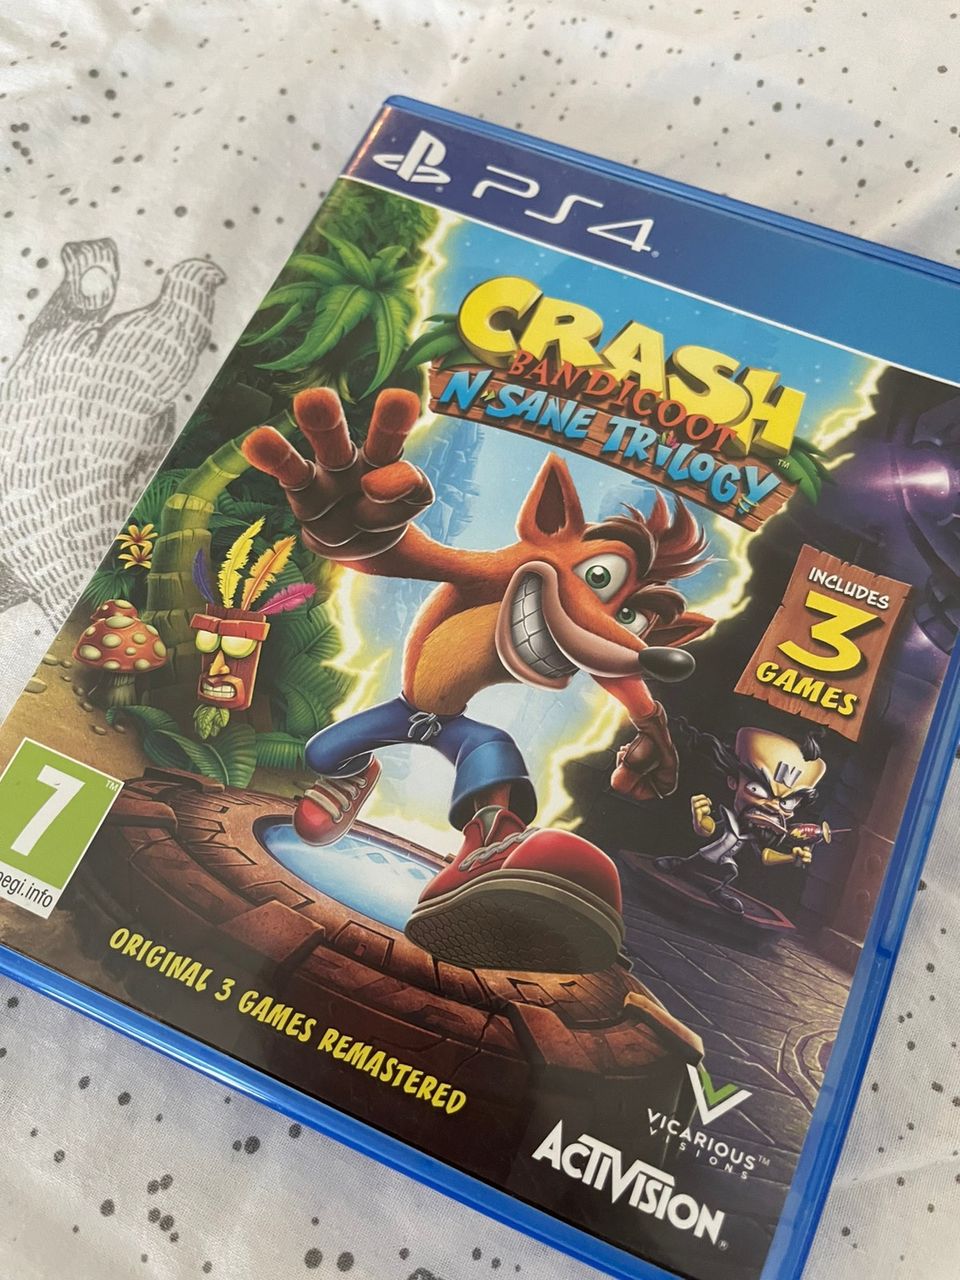 PS4: Crash Bandicoot N Sane Trilogy